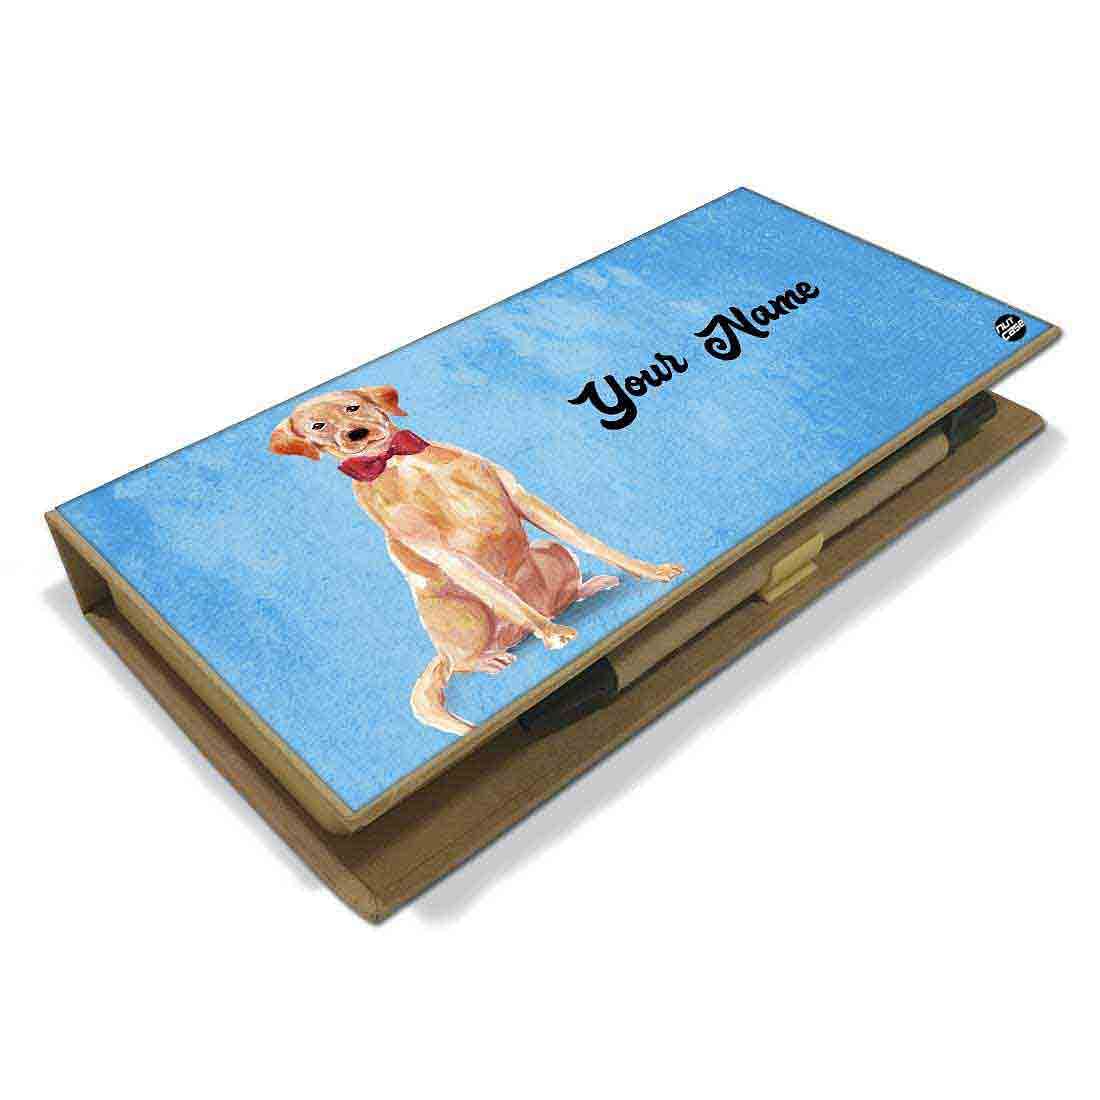 Customized Stationery Gift Kit Box Organizer for Office - Dog Nutcase